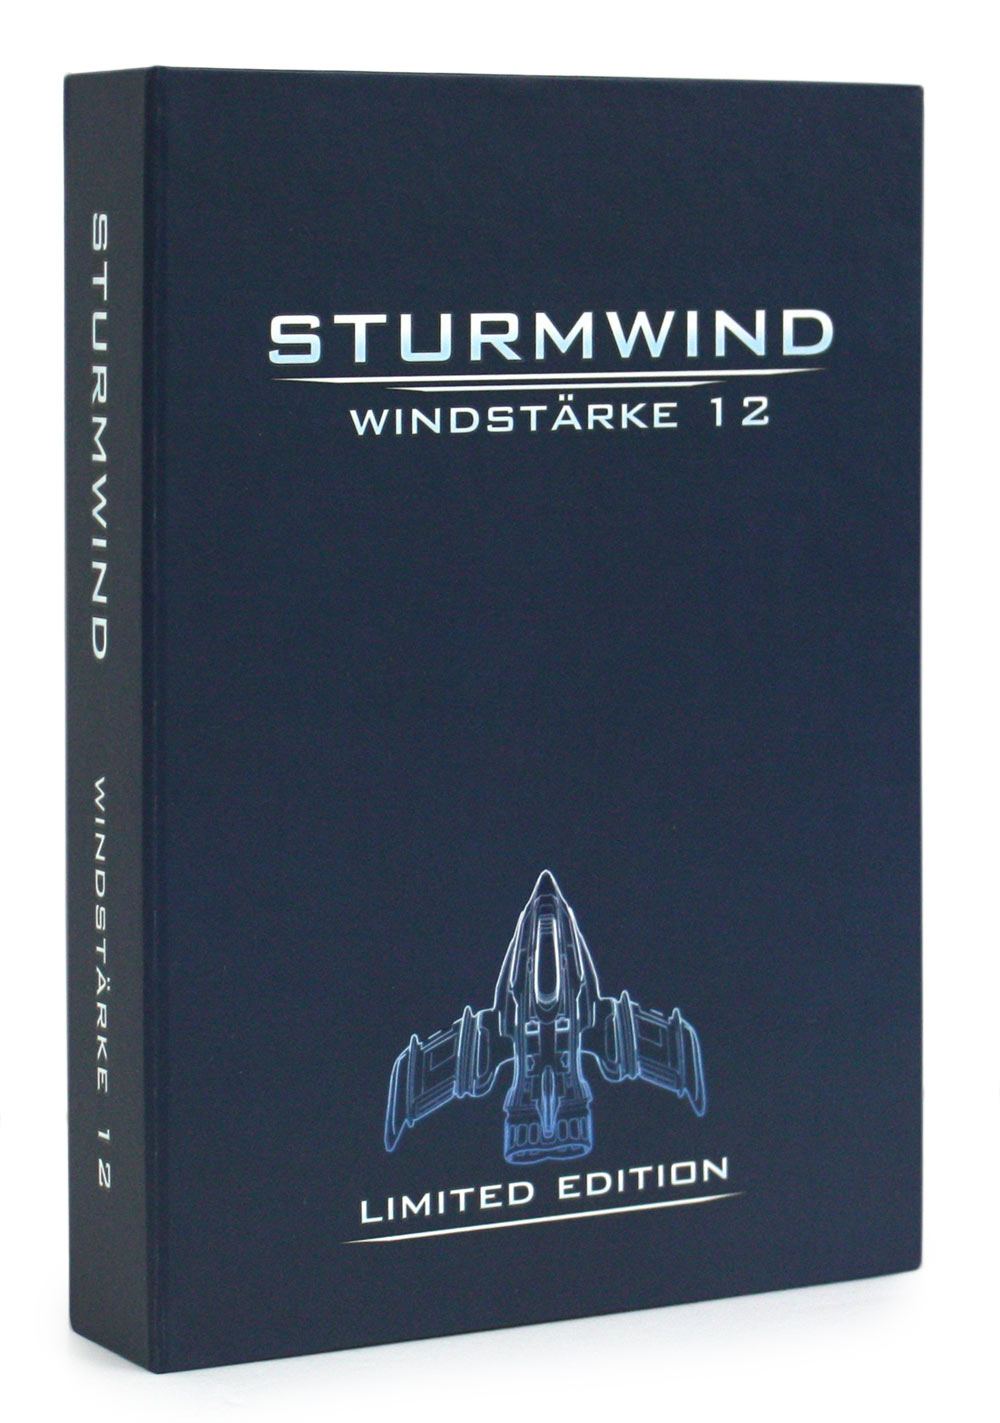 Sturmwind: Windstärke 12 [Limited Edition] for Dreamcast